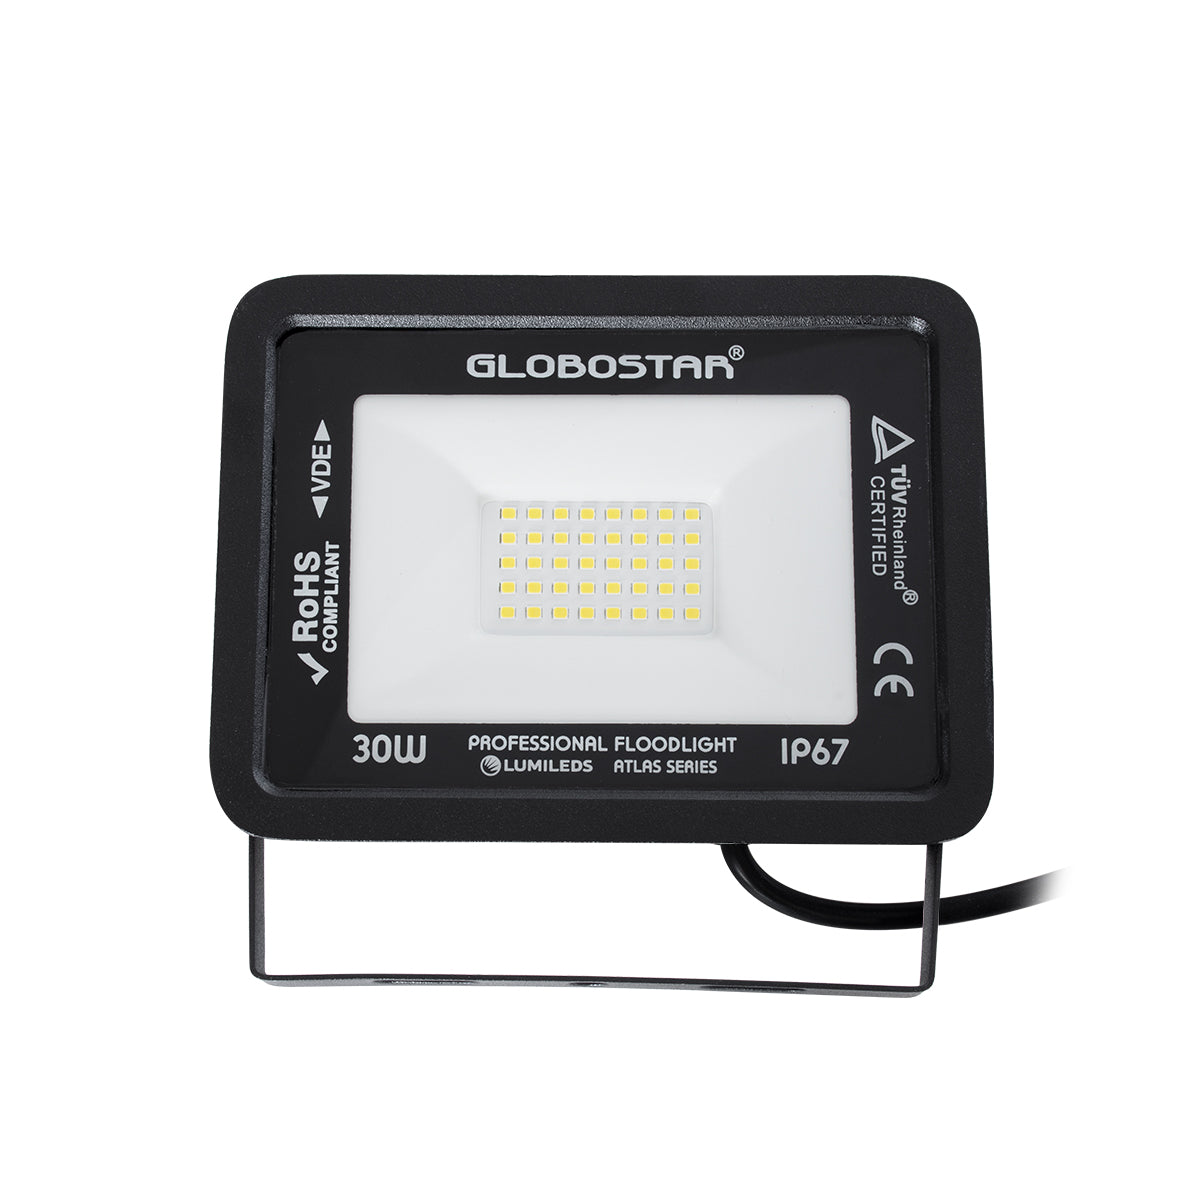 GloboStar® ATLAS 61417 Επαγγελματικός Προβολέας LED 30W 3600lm 120° AC 220-240V - Αδιάβροχος IP67 - Μ16 x Π2.5 x Υ12.5cm - Μαύρο - Φυσικό Λευκό 4500K - LUMILEDS Chips - TÜV Rheinland Certified - 5 Years Warranty